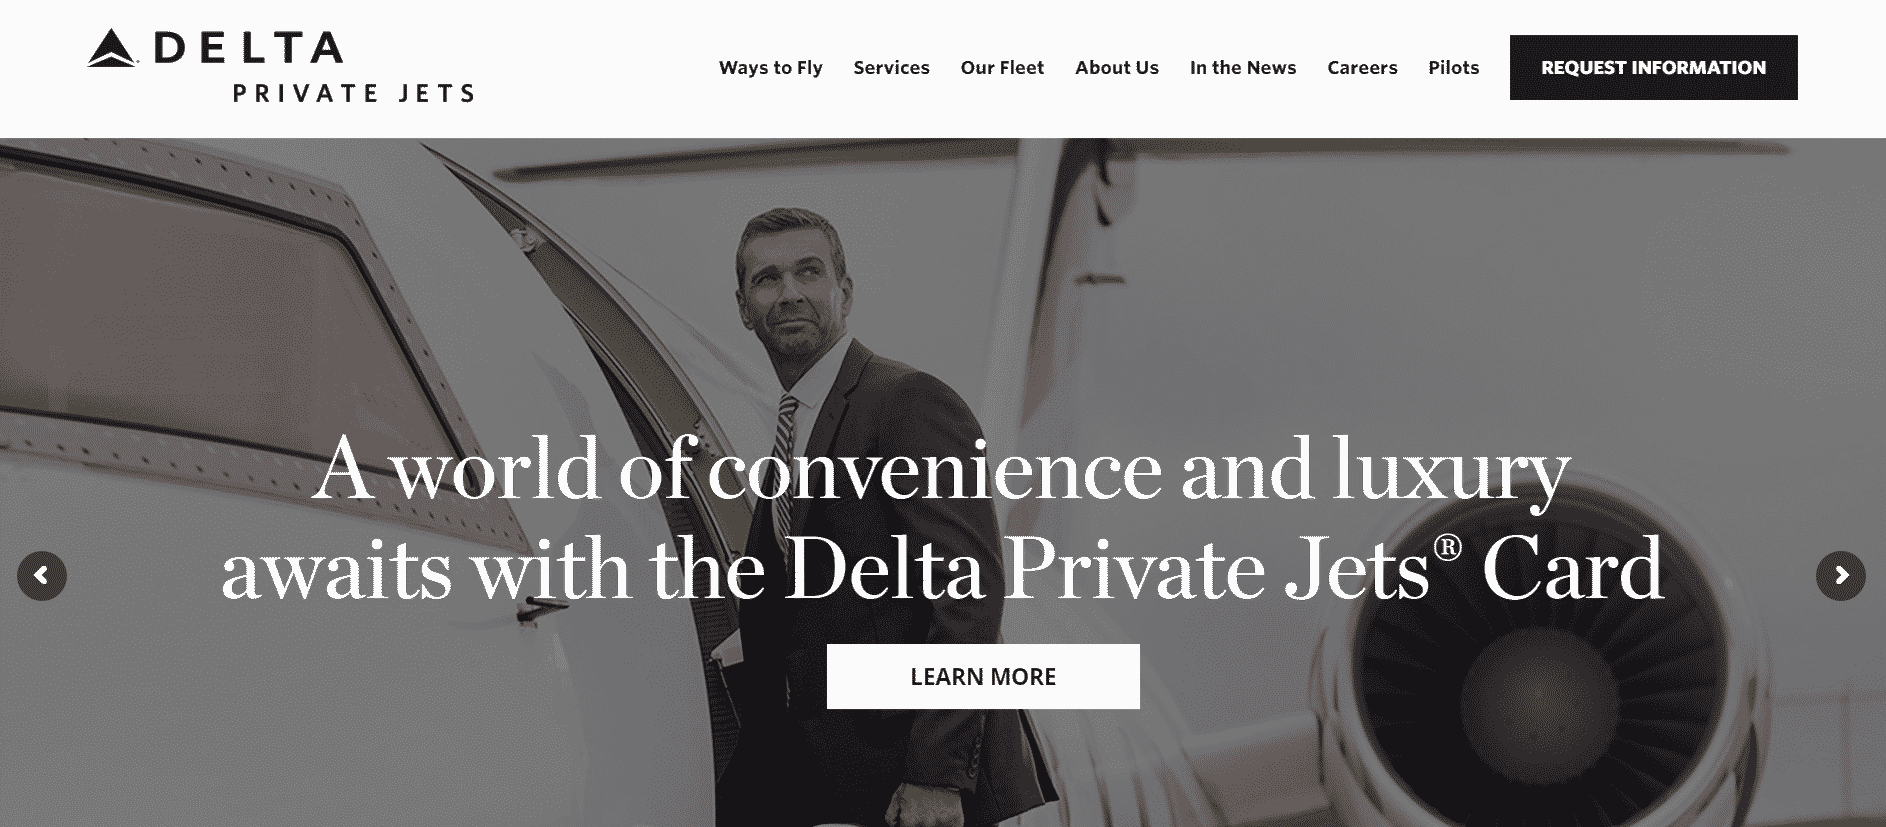 Private jet memberships: Delta Private Jets